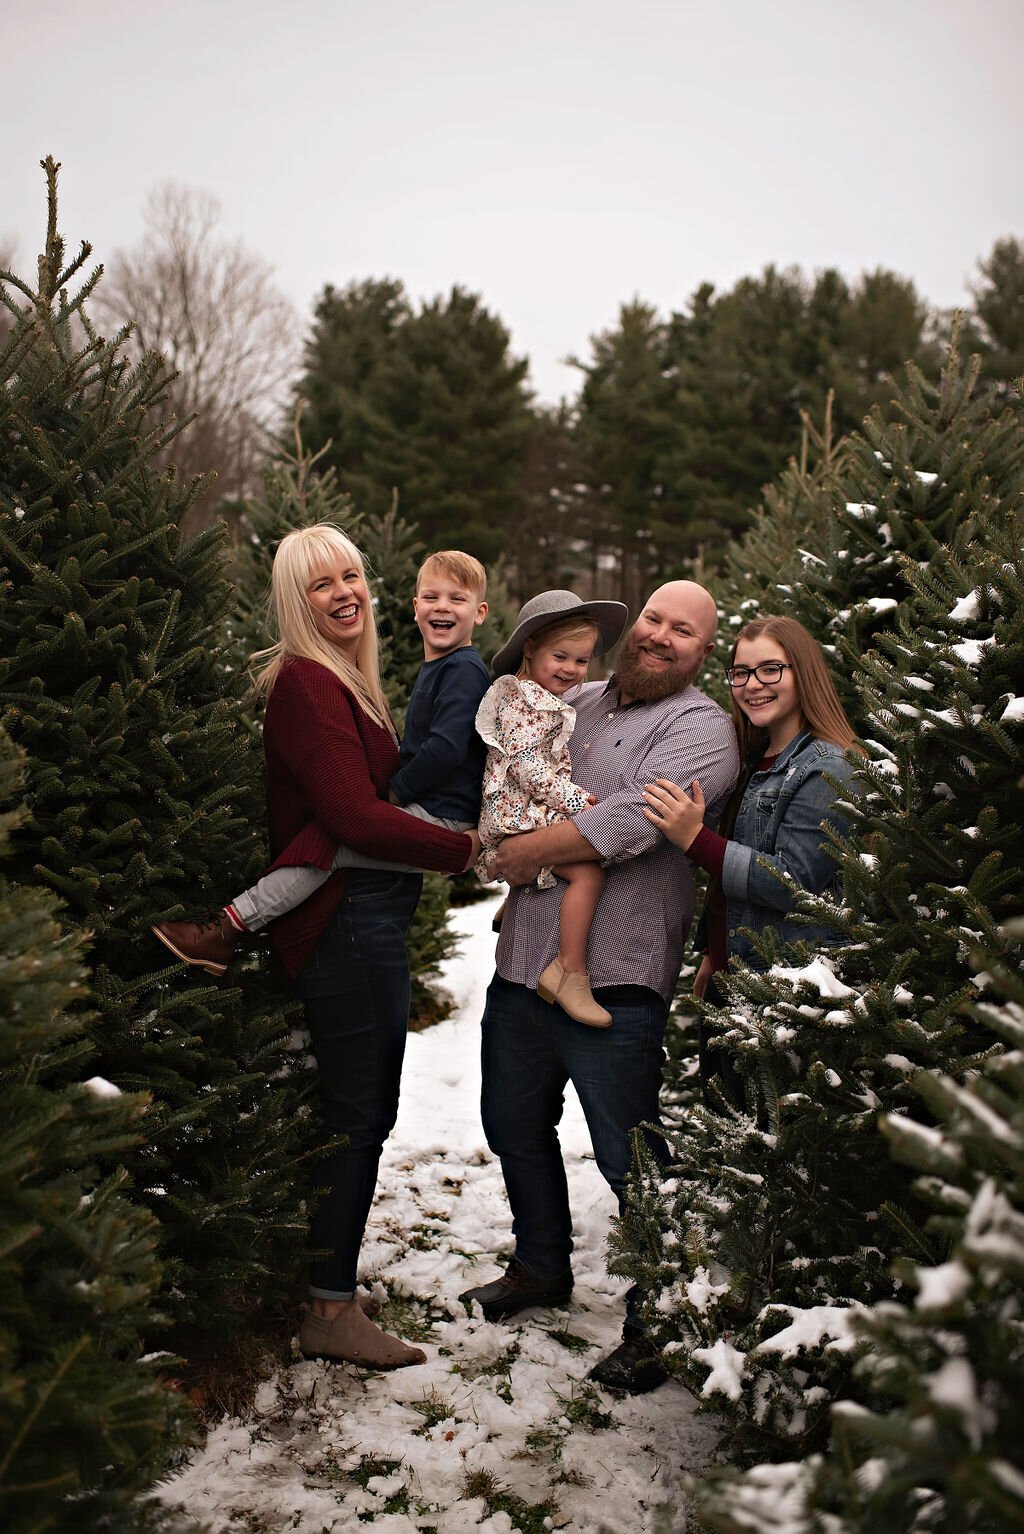 outdoor-winter-snow-tree-farm-christmas-photos-holiday-family-session-sugar-pines-chesterland-ohio.jpeg